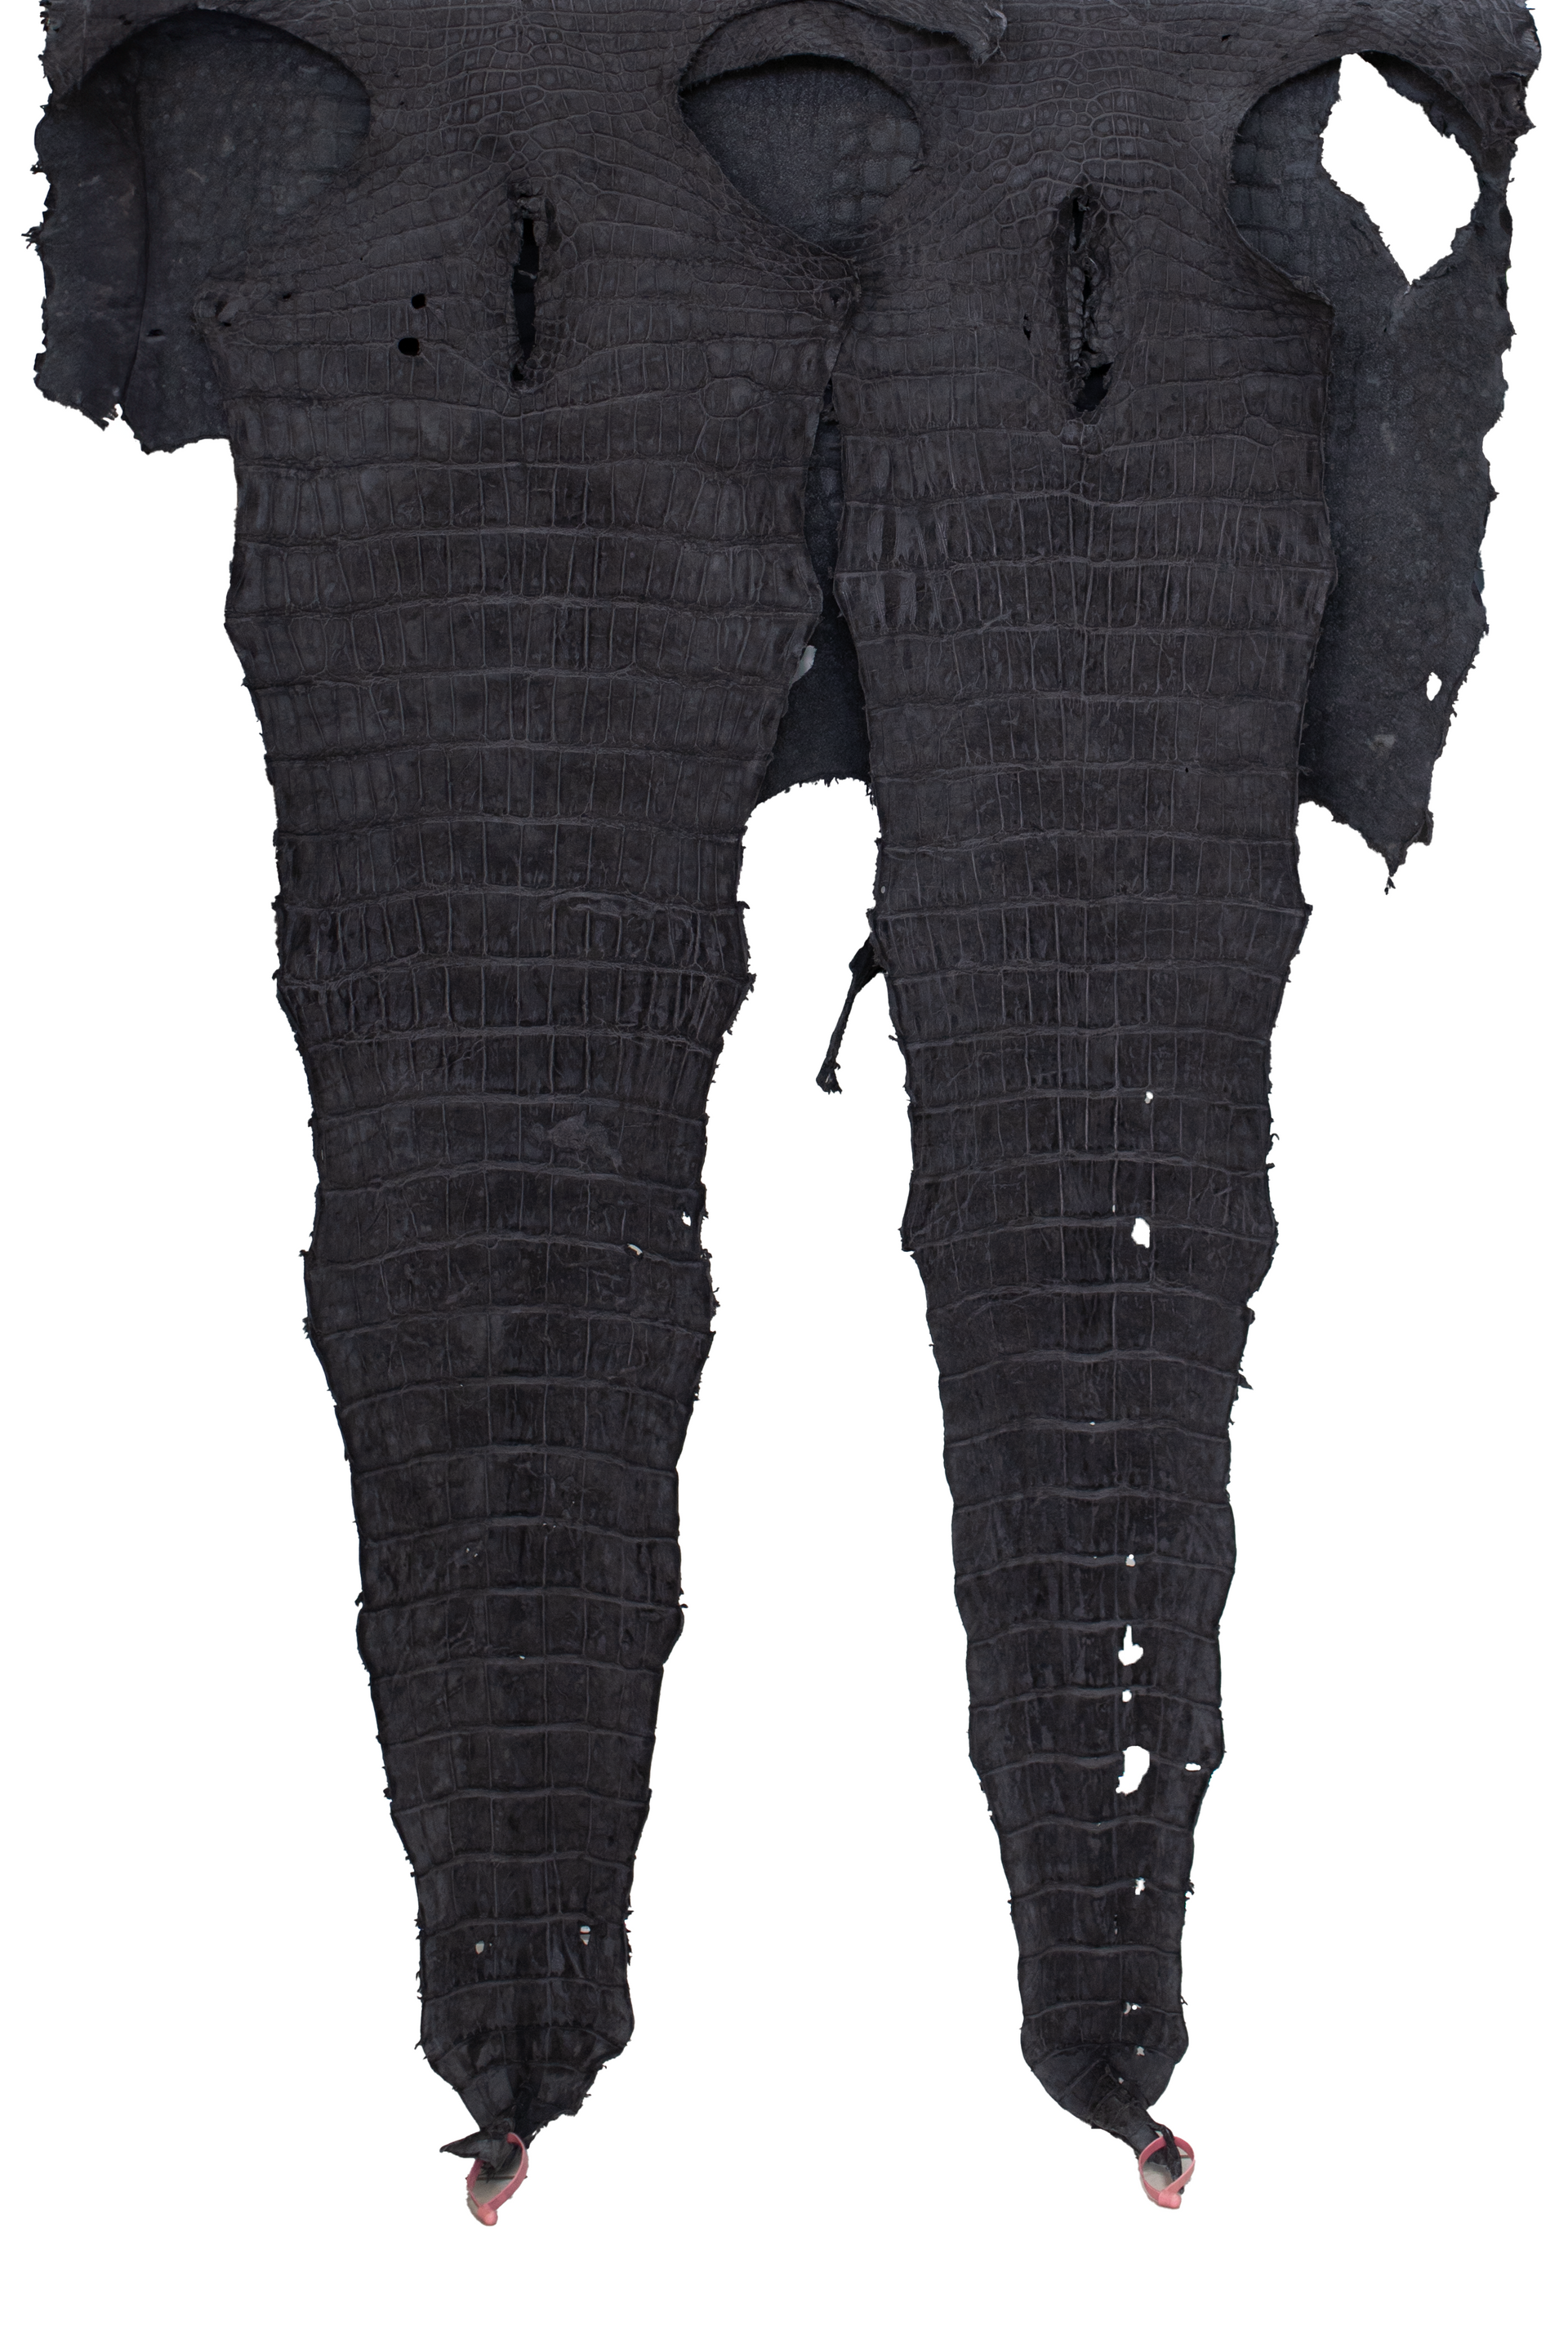 REJECTS & HALF SKINS | 72-79 cm Grade 4/5 Anthracite Nubuck Wild American Alligator Leather